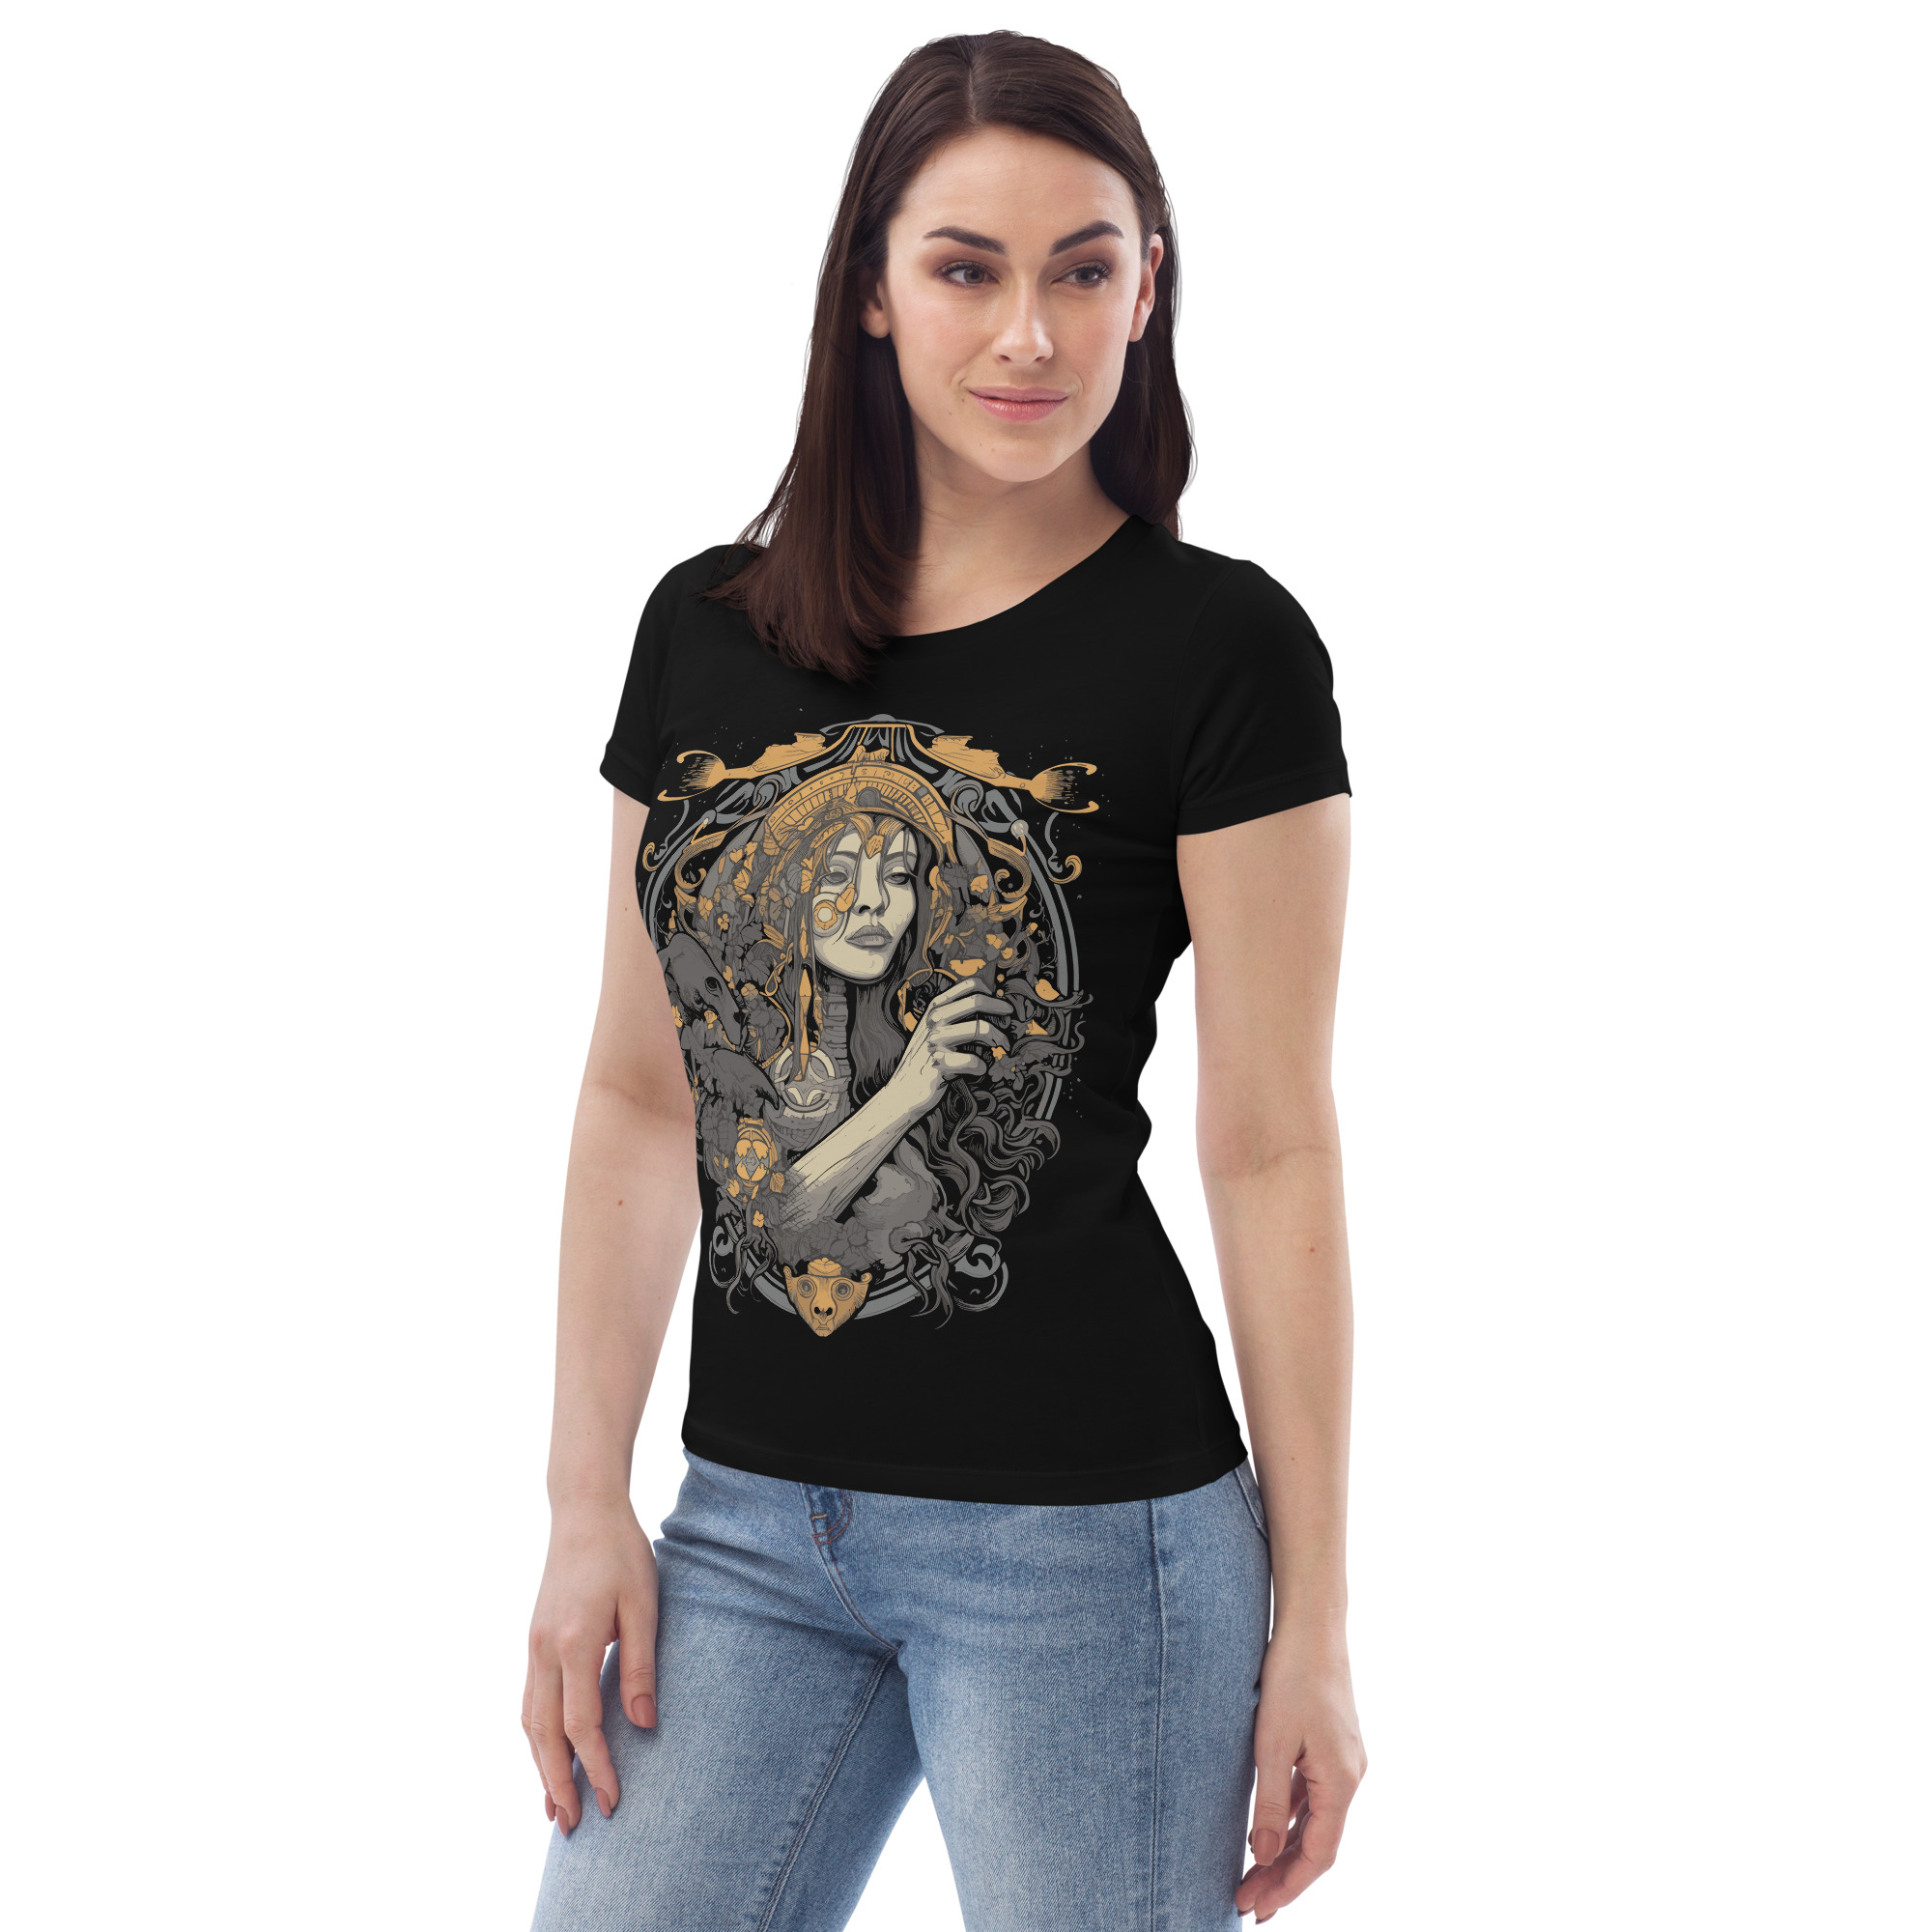 T-shirt femme – Dark Beauty – Ethereal Secrets T-shirts Wearyt